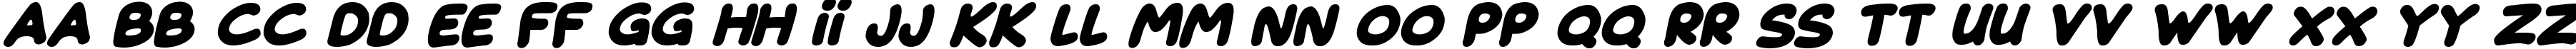 Пример написания английского алфавита шрифтом Magical Markers Italic